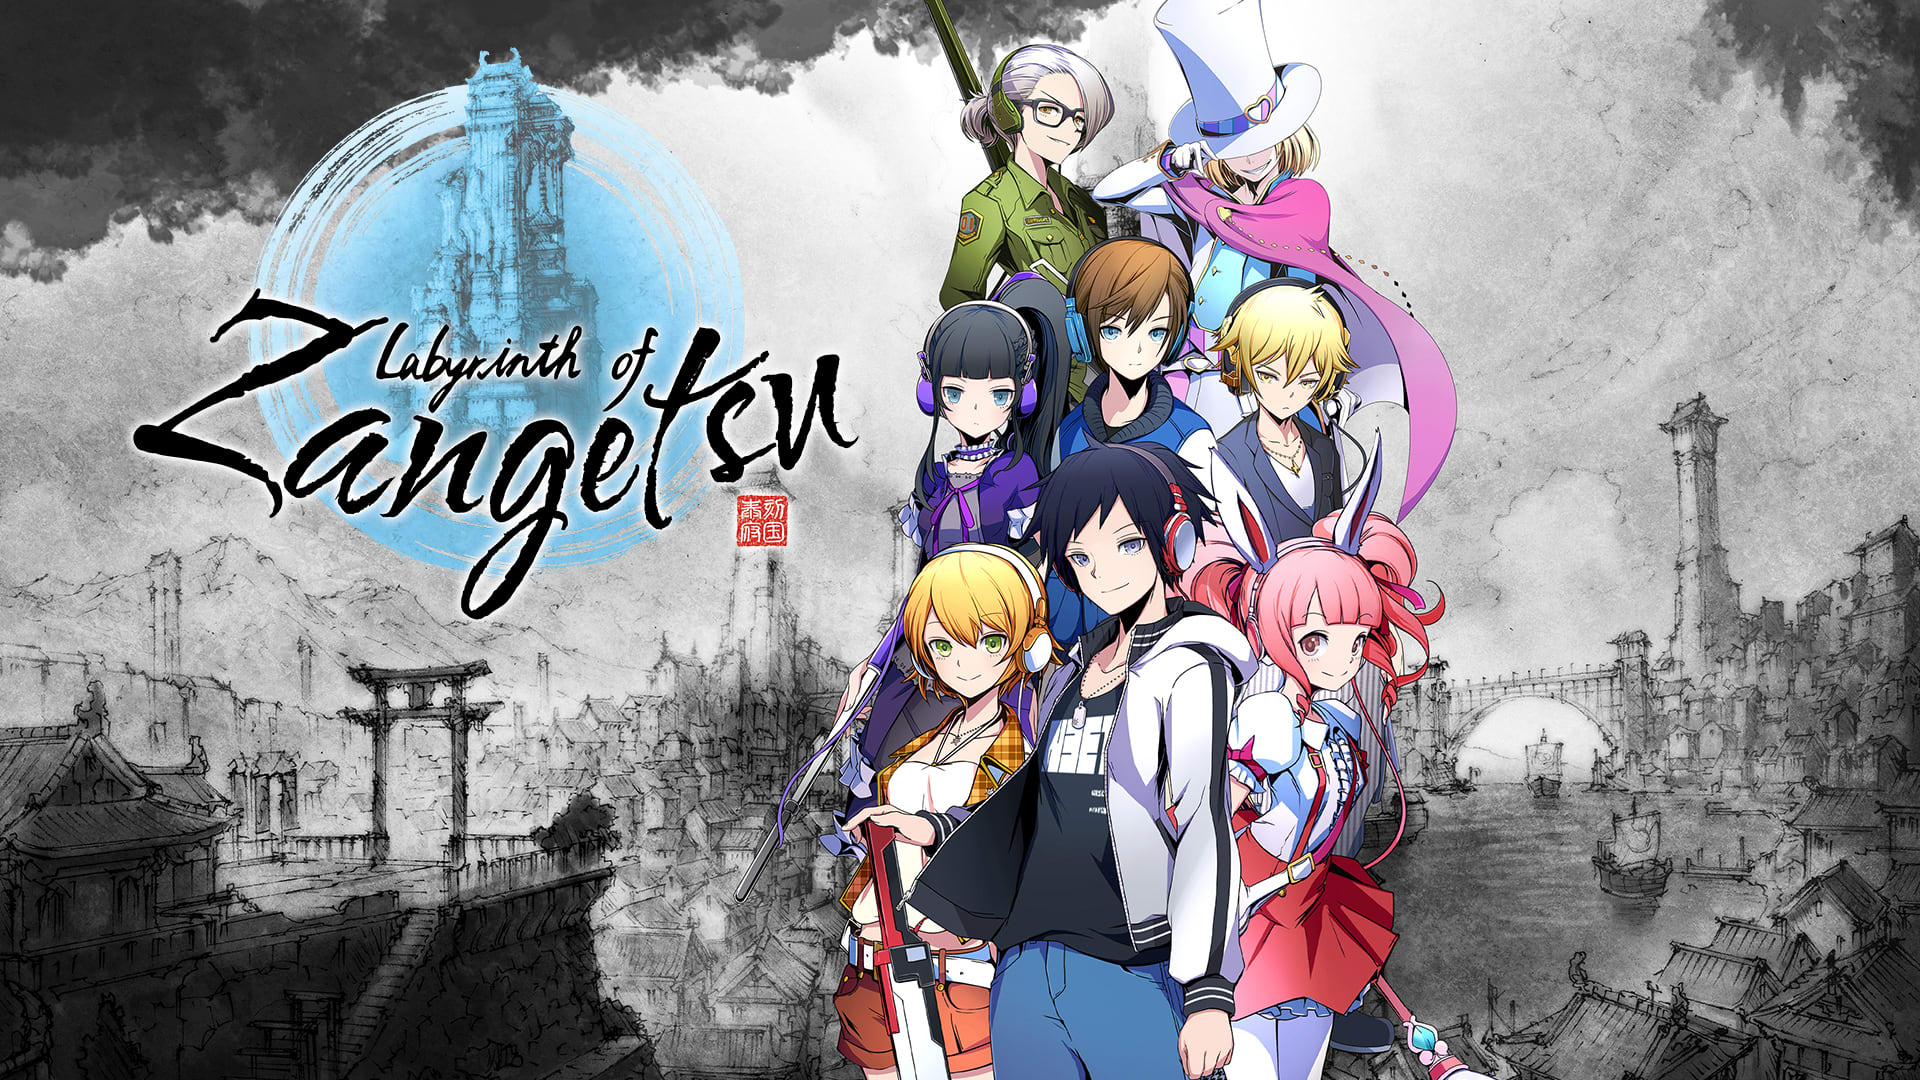 Labyrinth of Zangetsu - AKIBA'S BEAT Collaboration - Additional Characters Pack